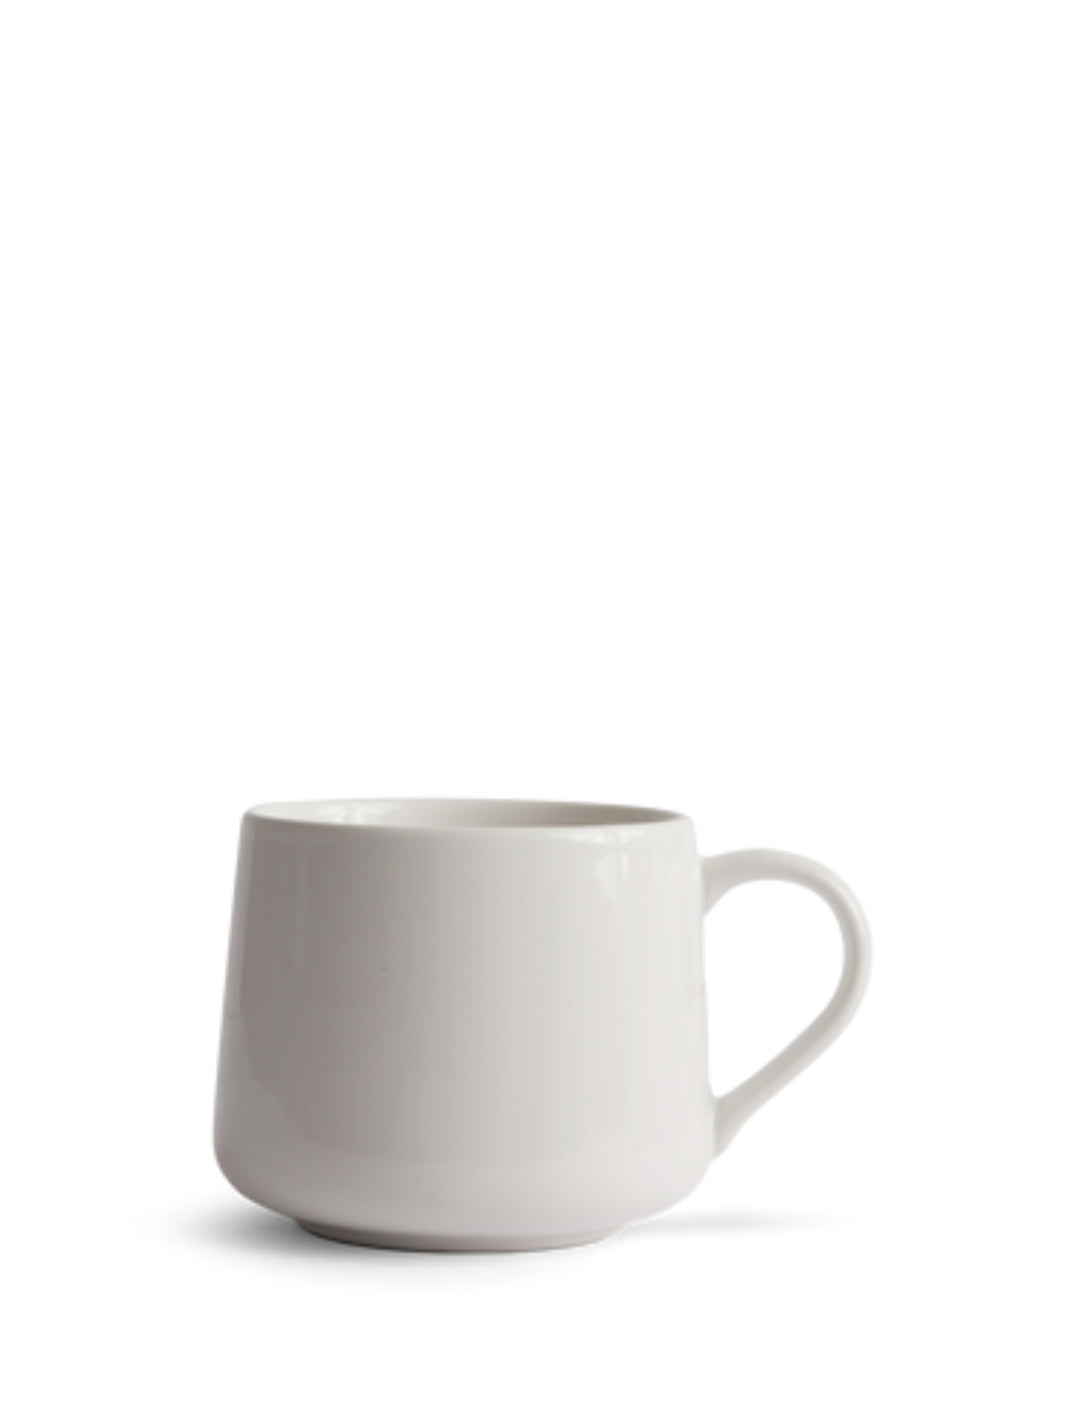 Small coffee cups and Mugs